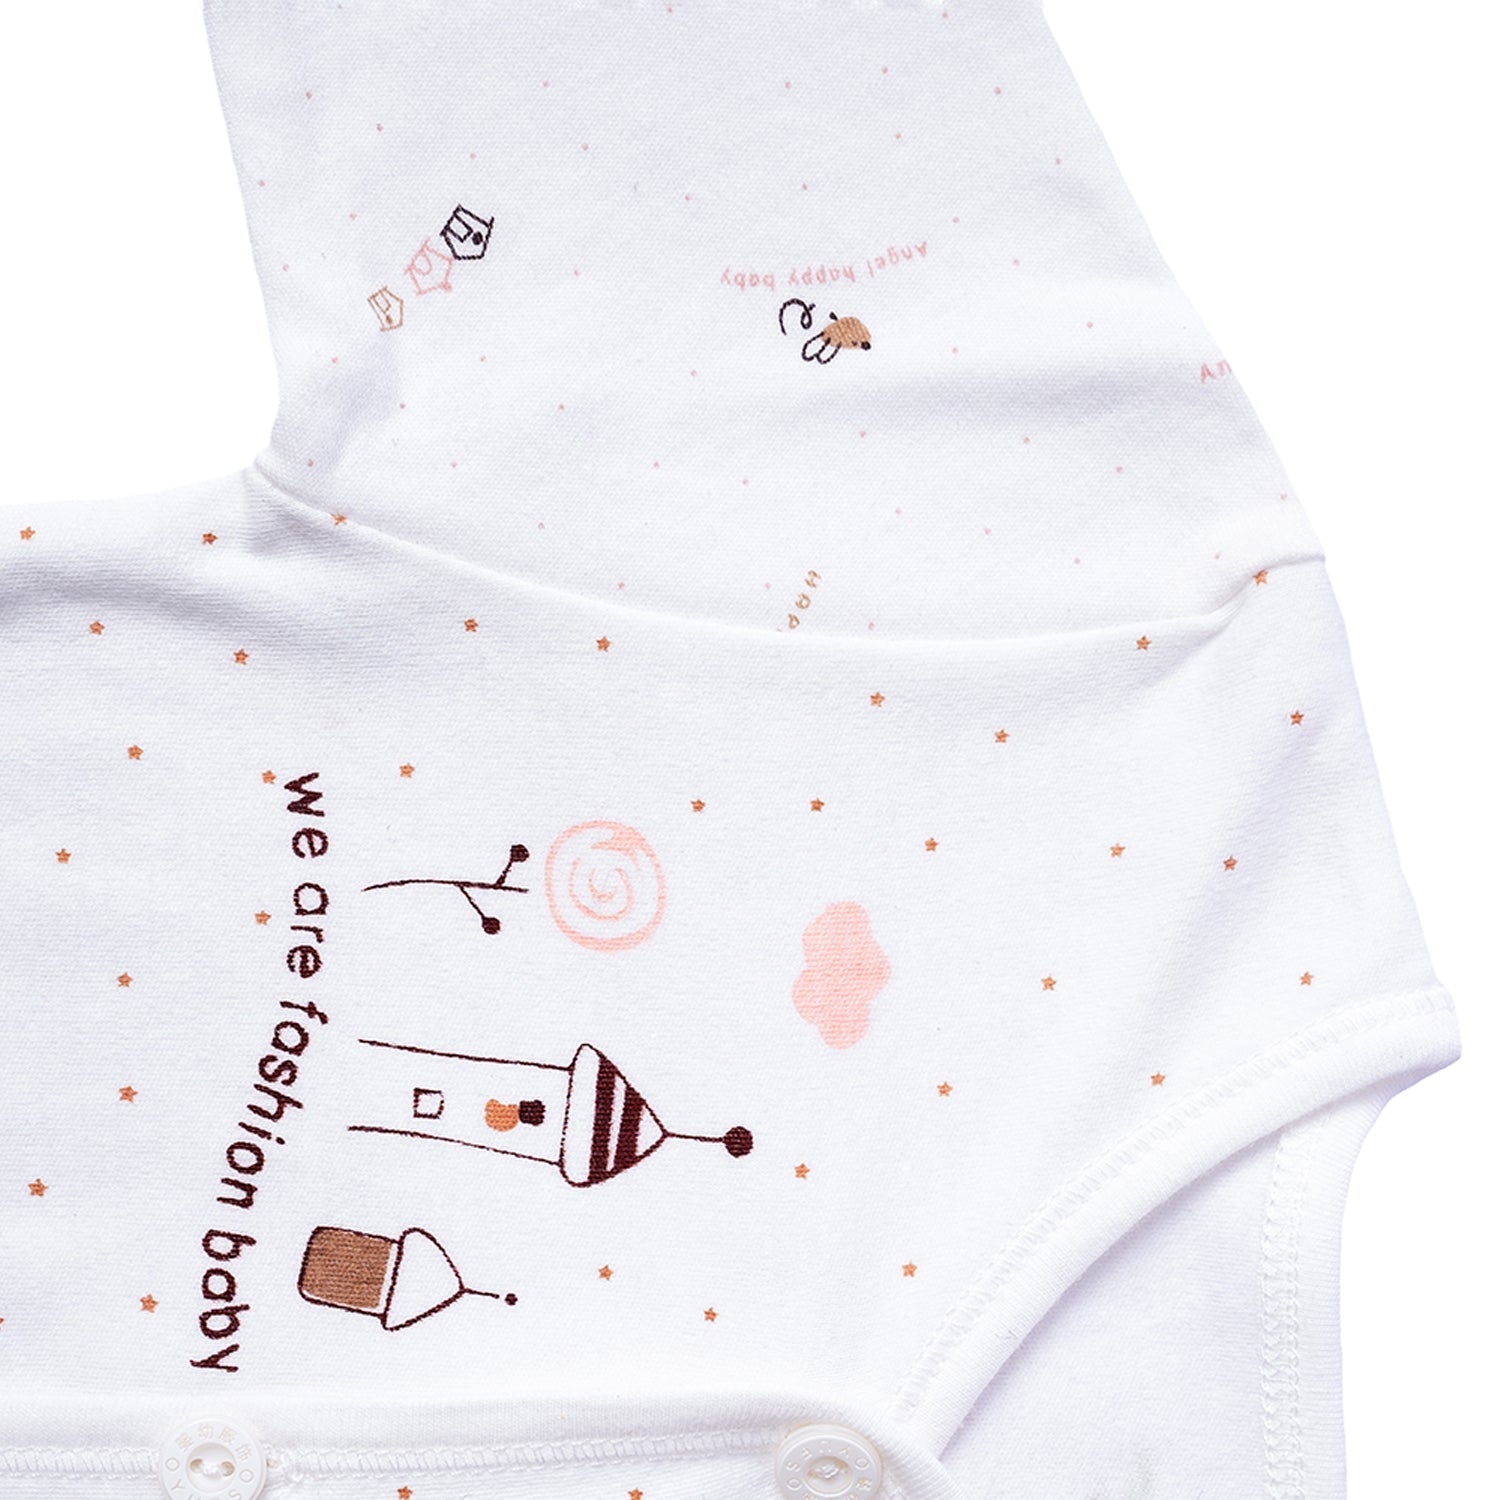 Baby Moo Animal Print Cap Bib Pyjamas 5 Pcs Clothing Gift Set - Peach